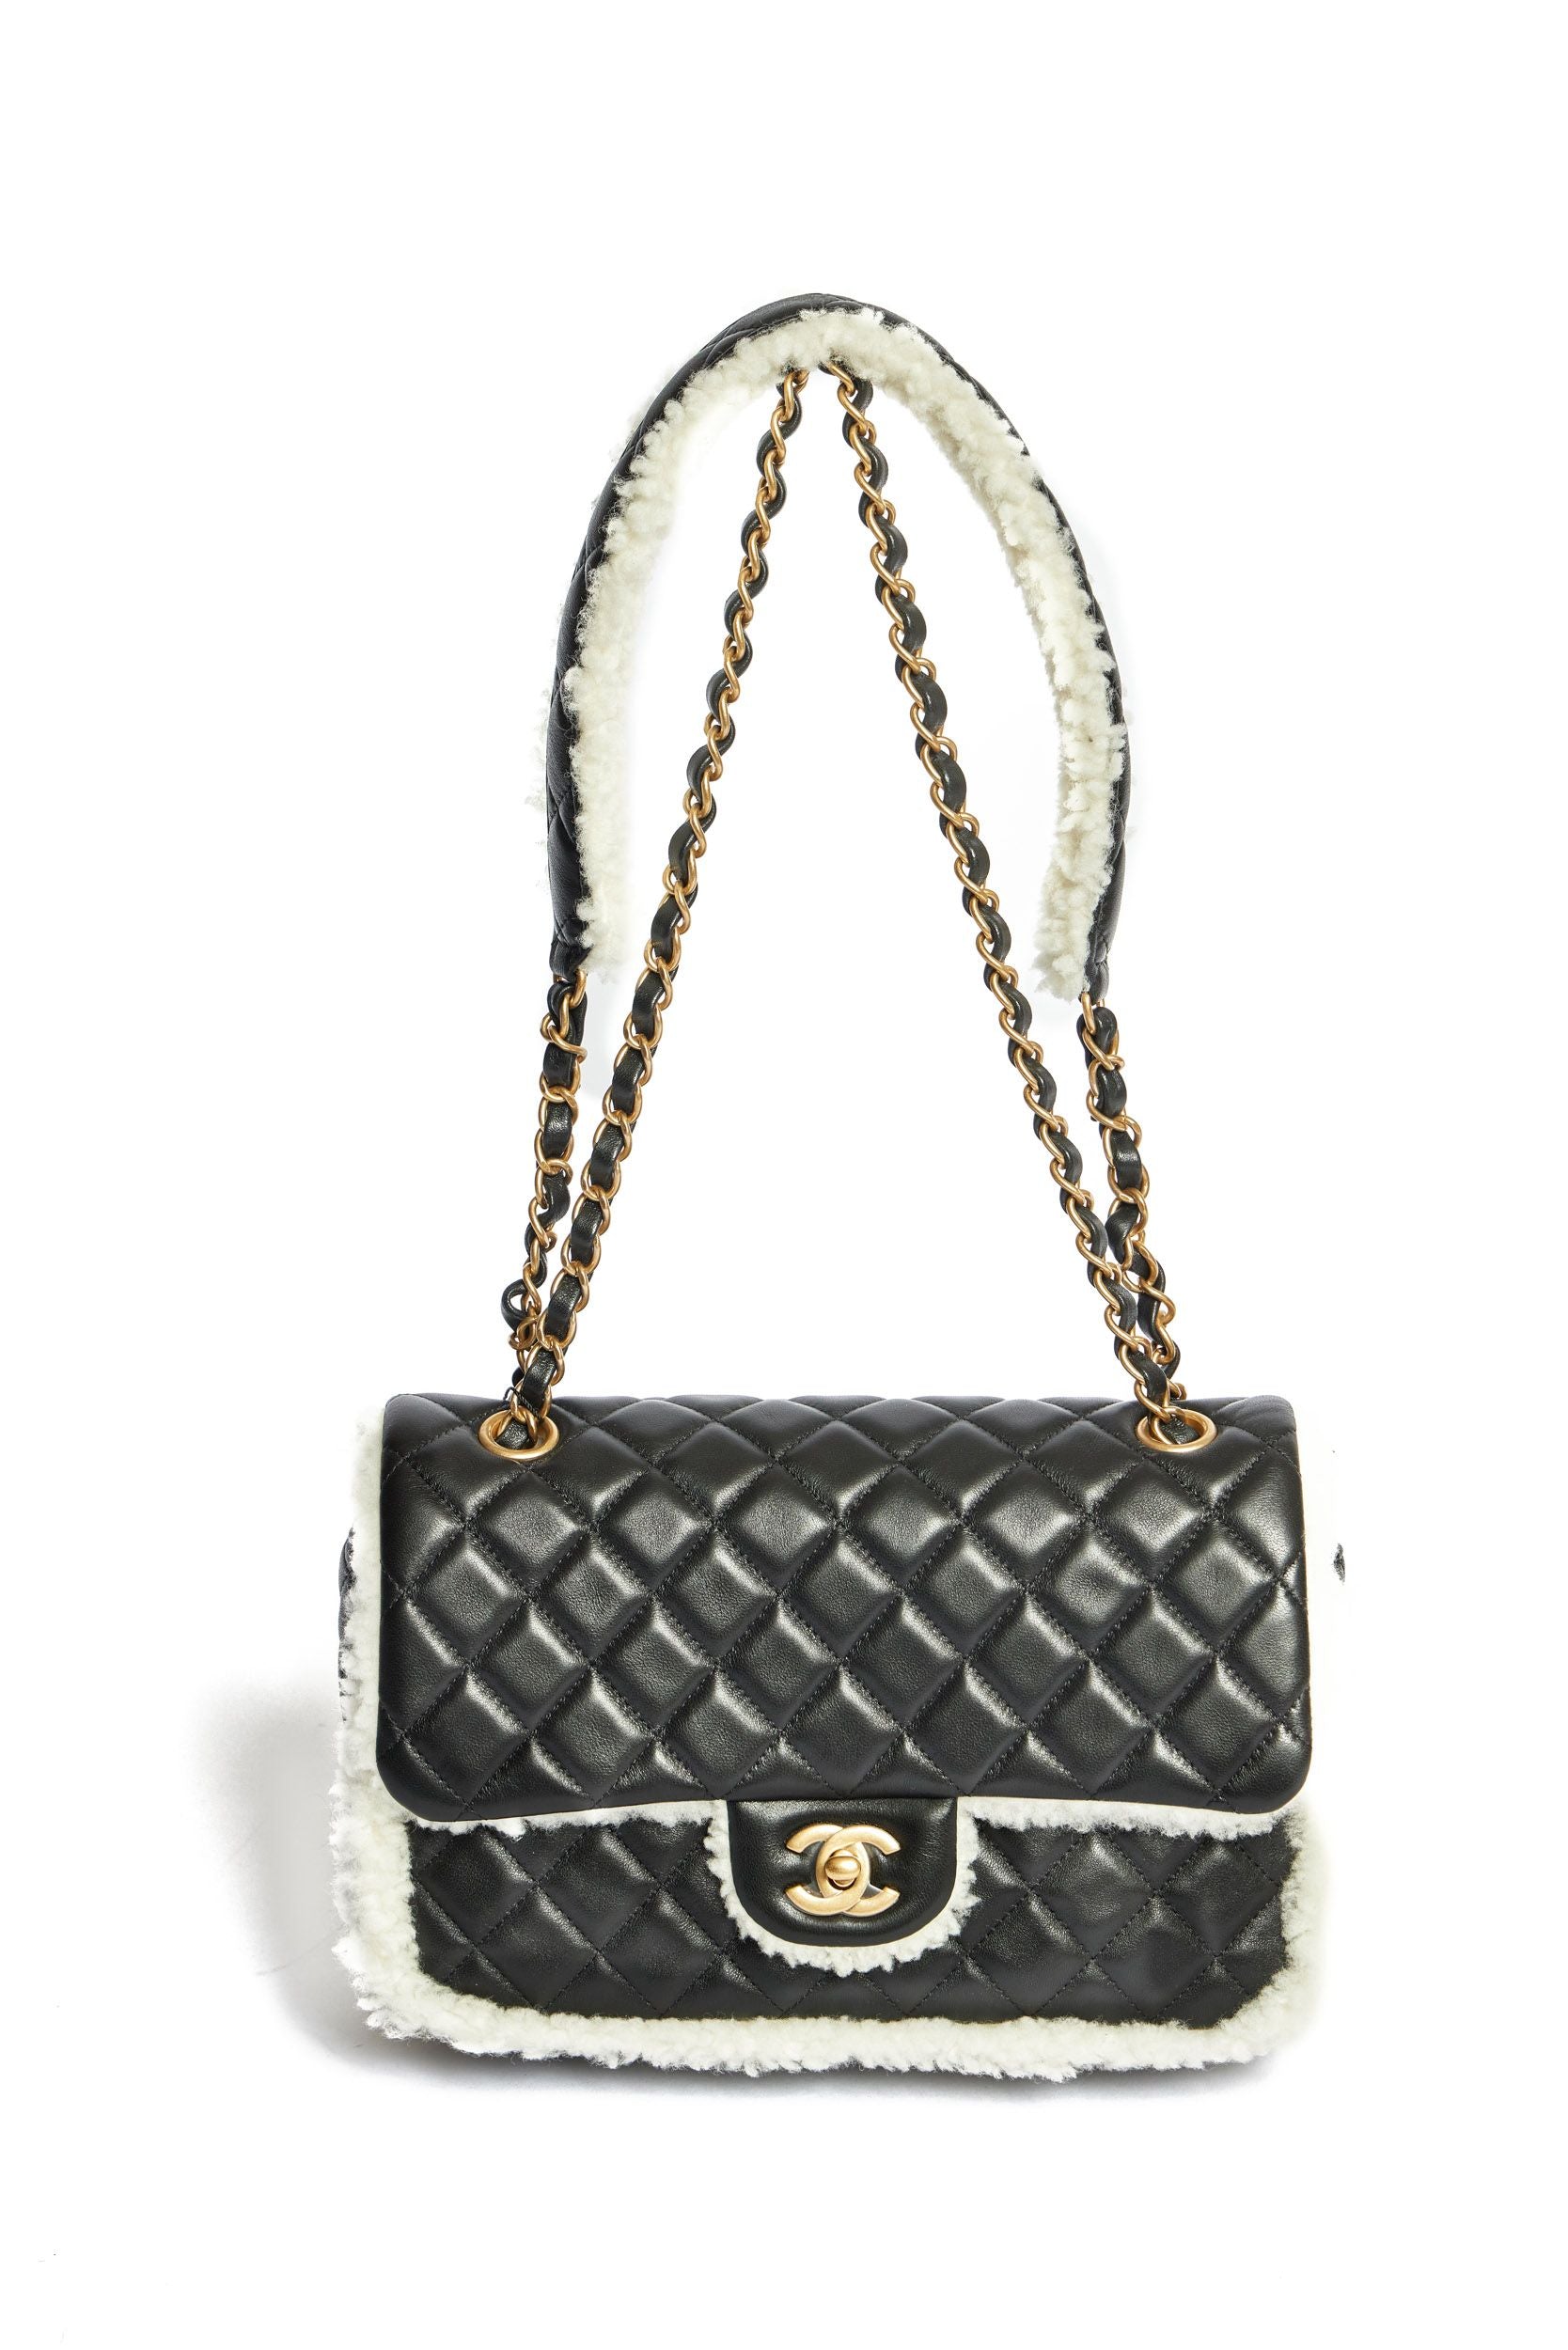 Chanel Large Fur Flap Bag - Vintage Lux